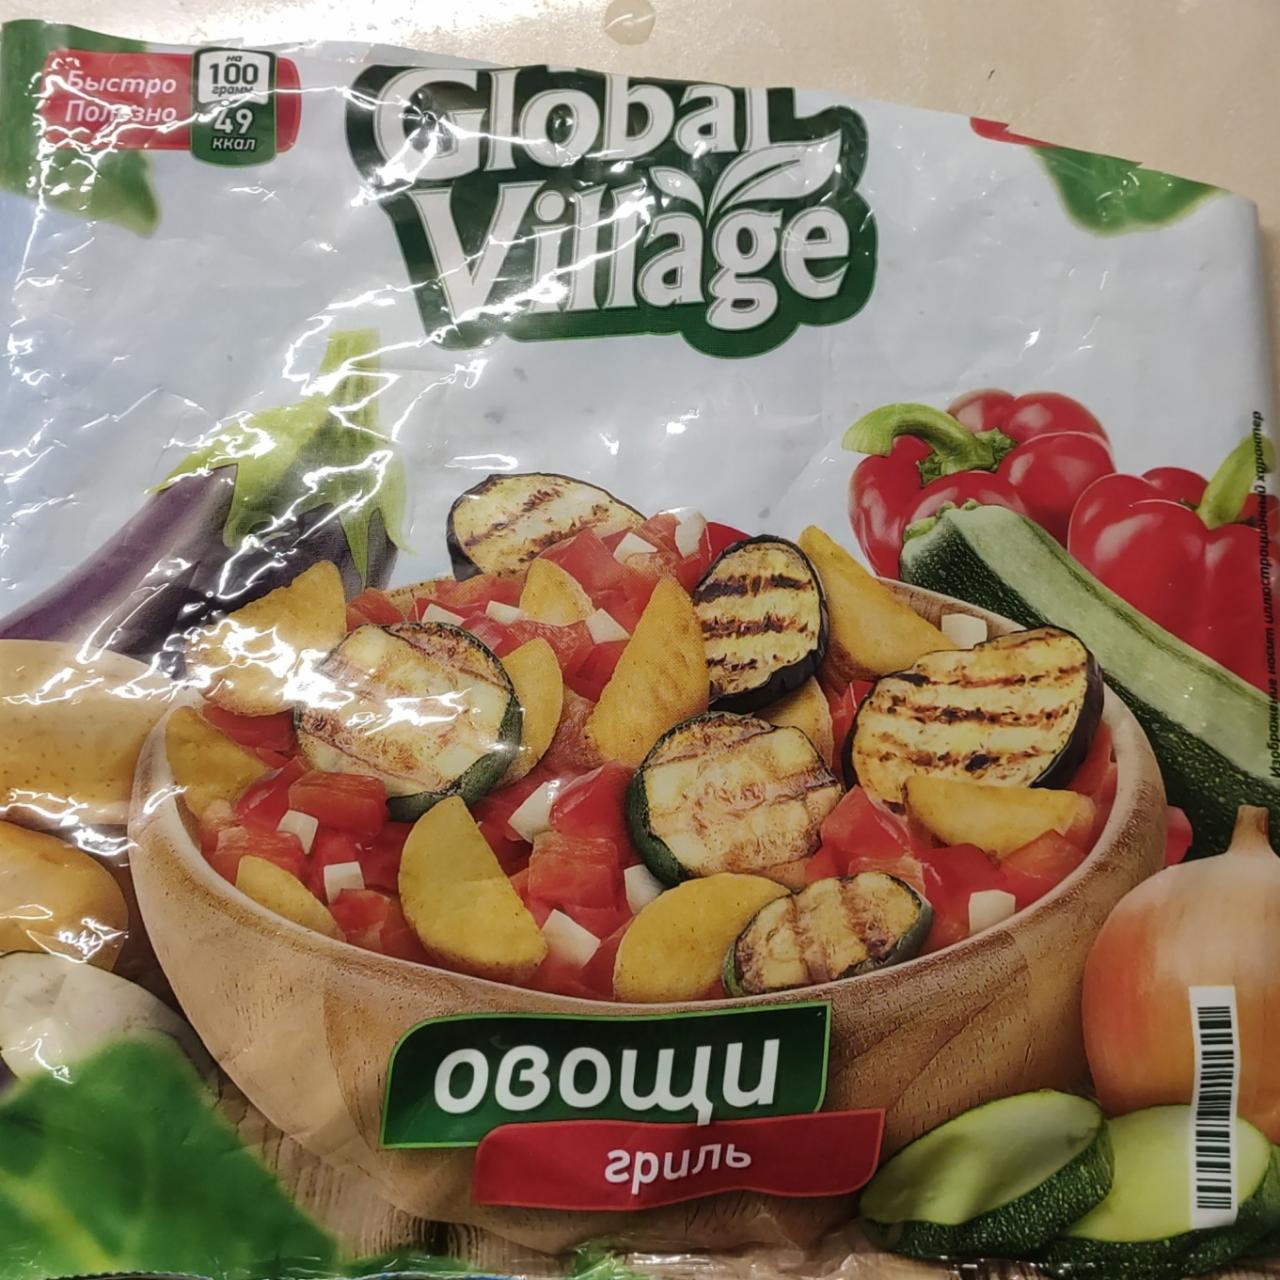 Овощи гриль калорийность. Global Village замороженные овощи. Global Village закуска. Овощи гриль Глобал Виладж калорий. Лобио Глобал Виладж 530 грамм.